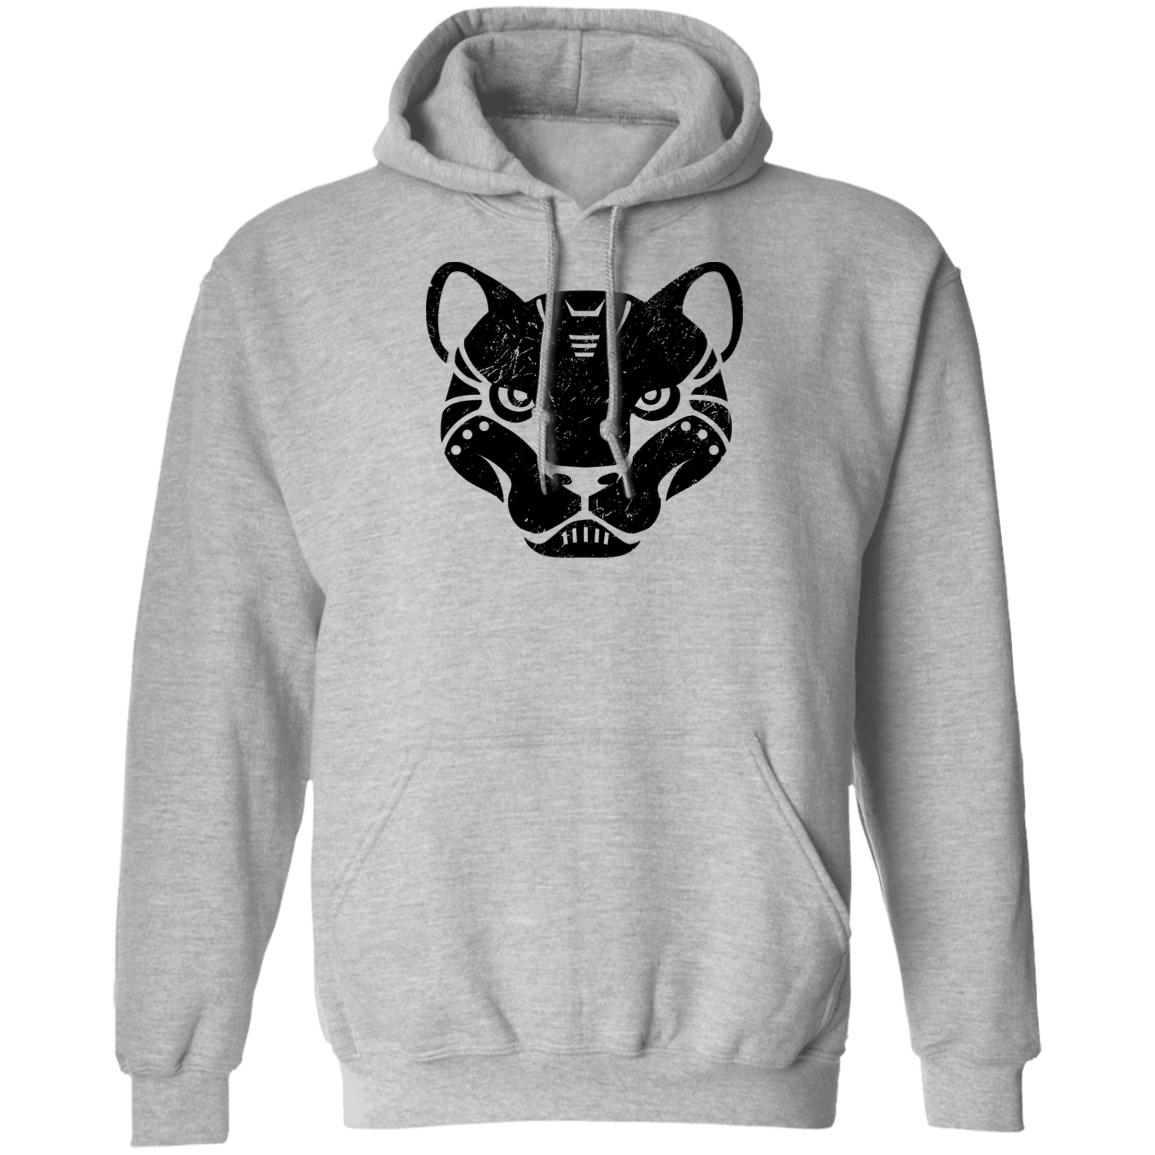 Black Distressed Emblem Hoodies for Adults Panther/Slash)